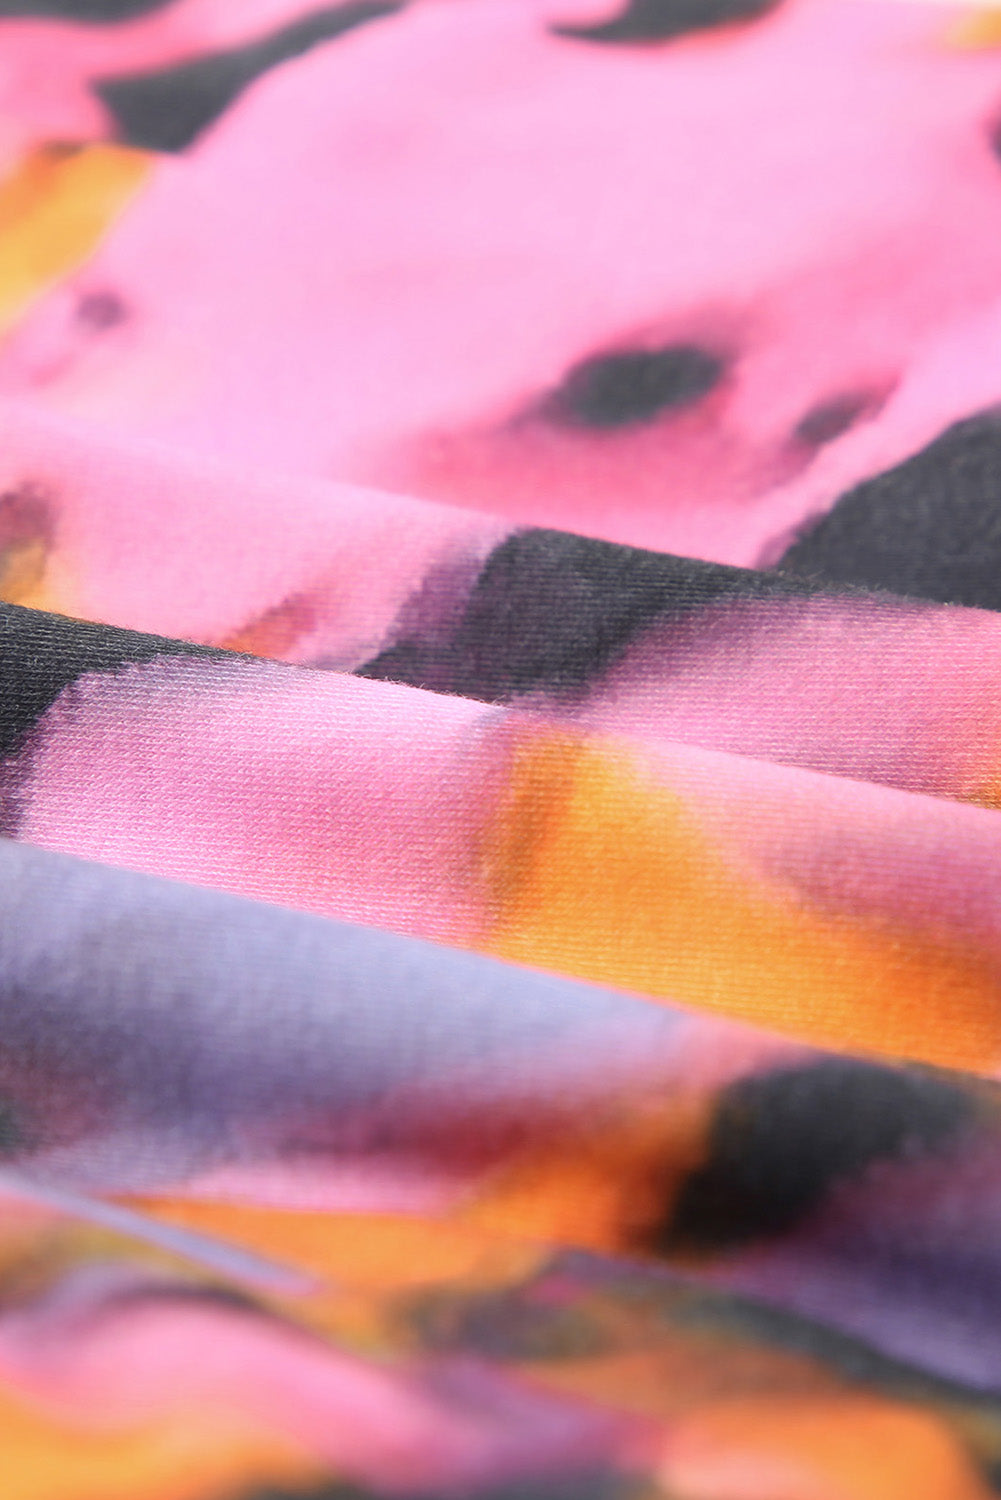 Multicolor Tie-dye Print Hollow Out Twist Bodycon Mini Dress